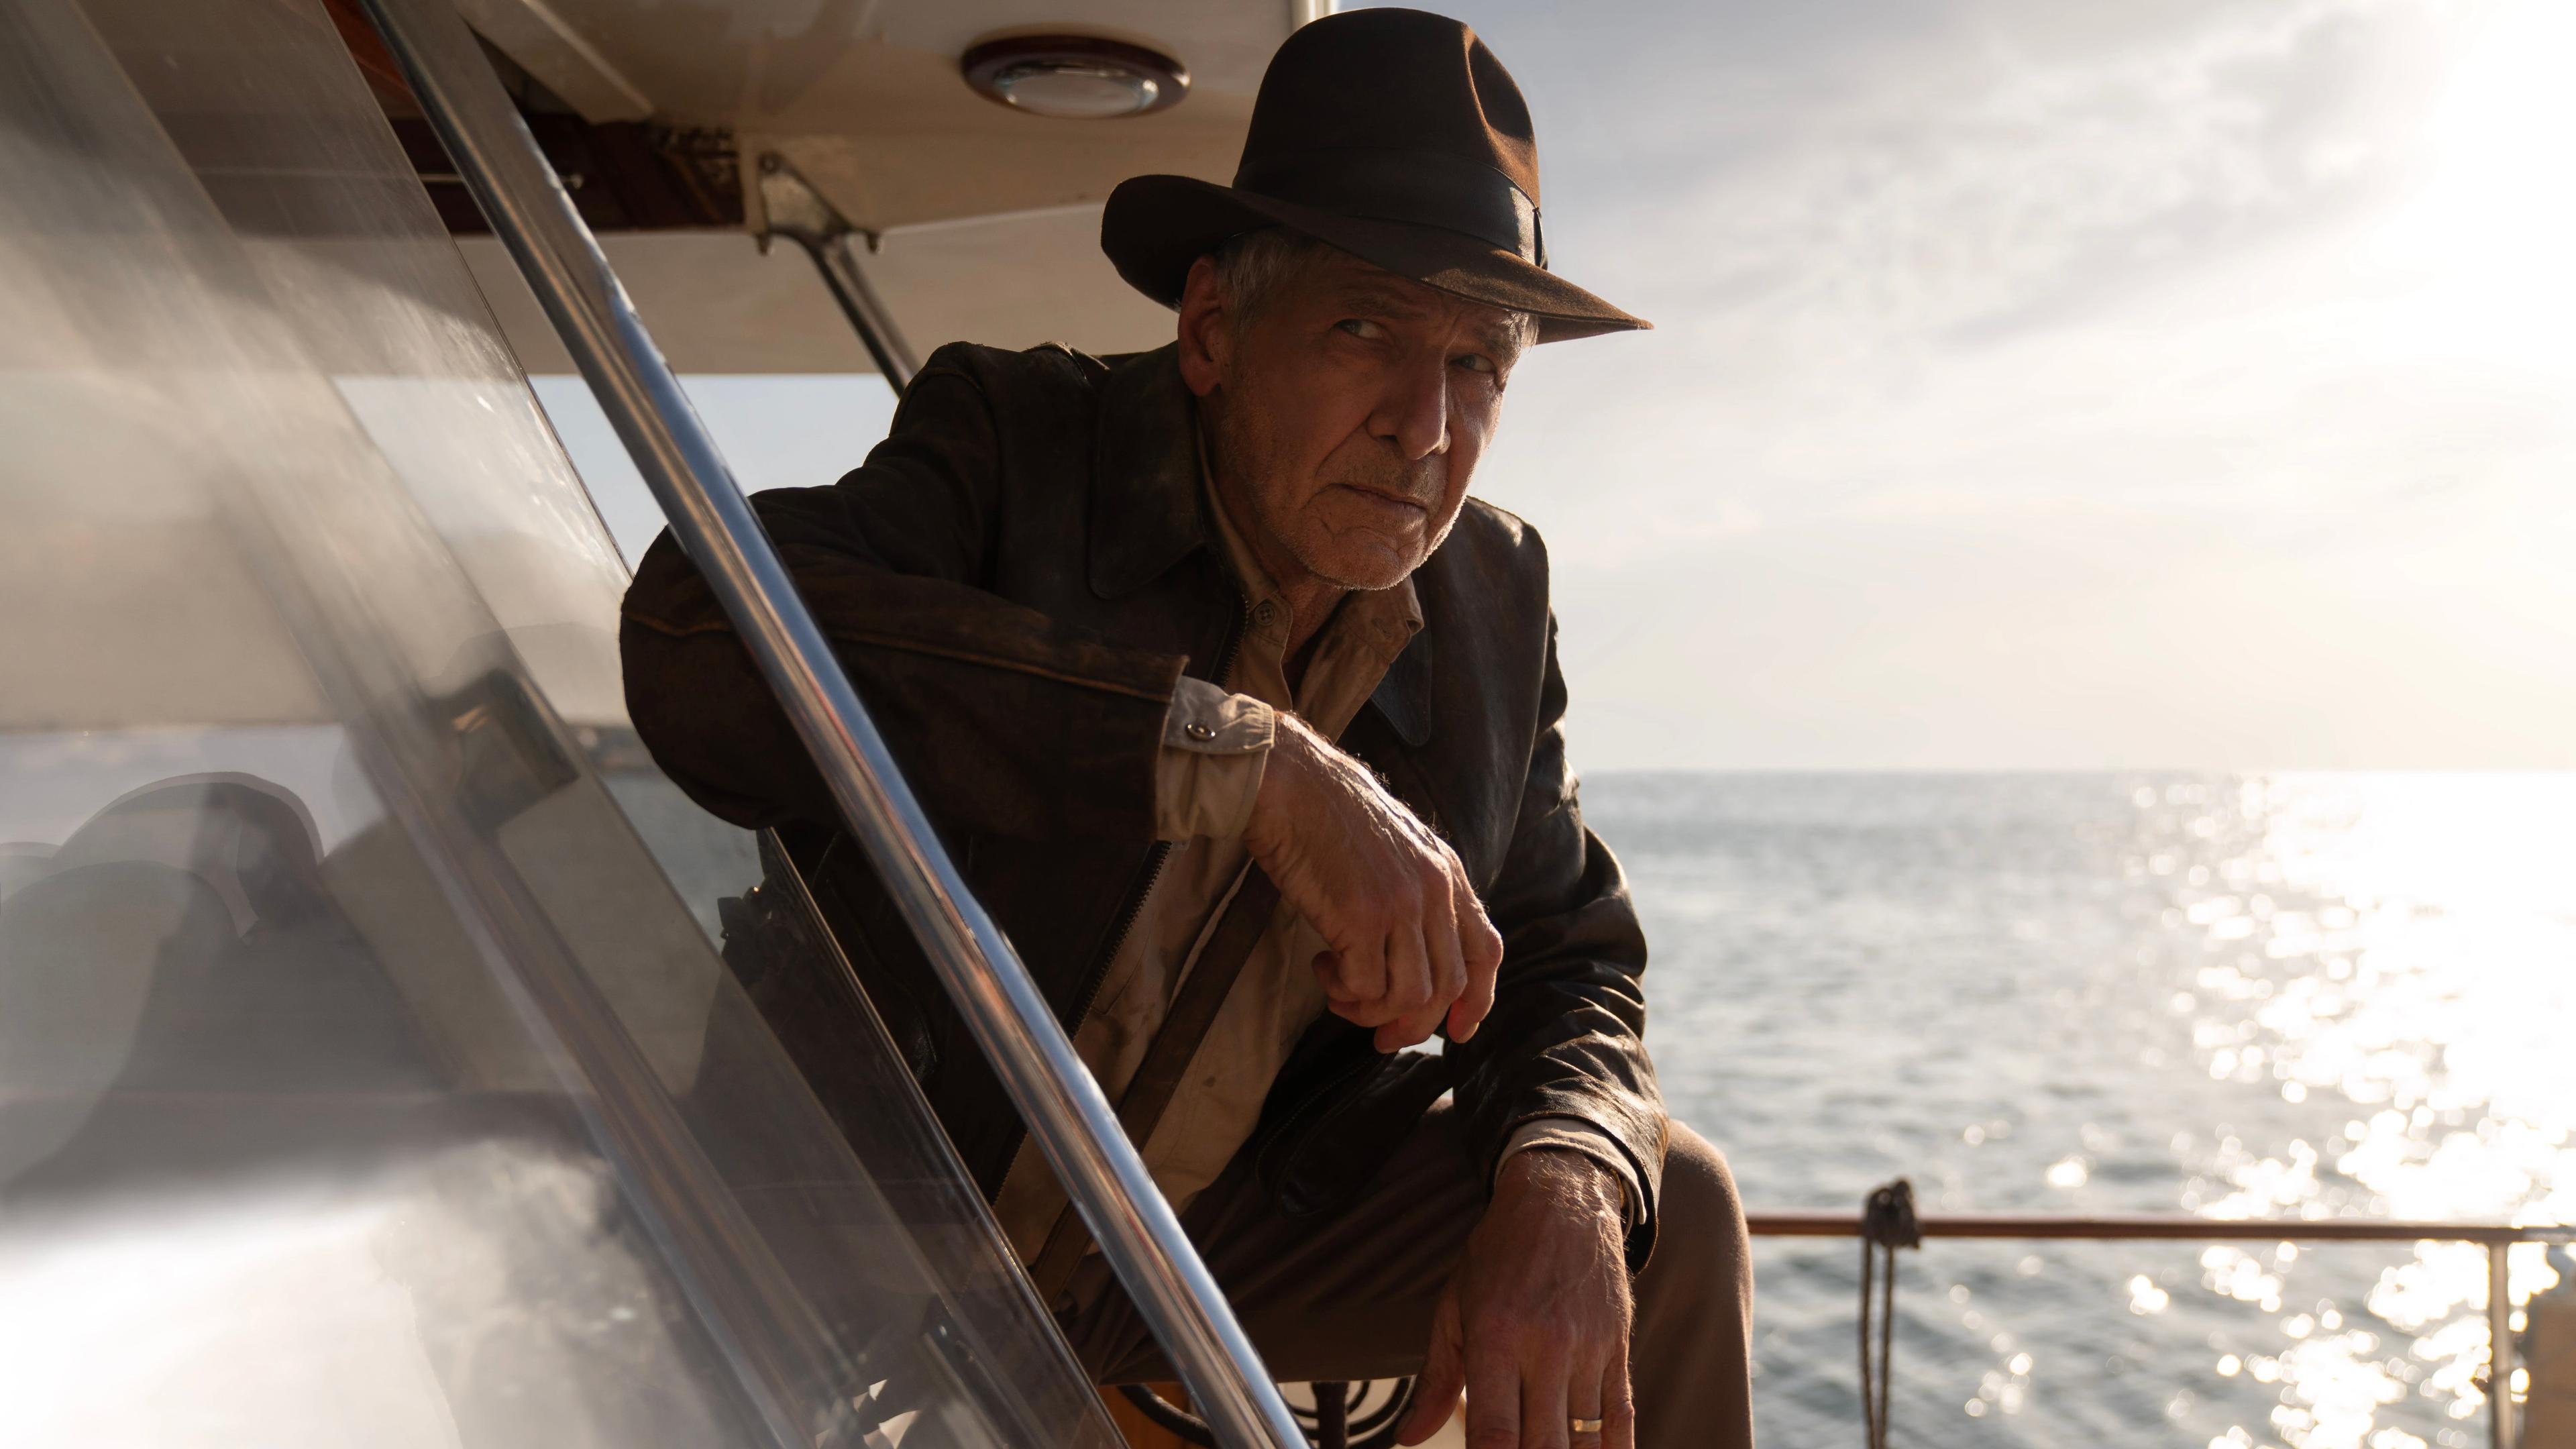 Indiana Jones 5' : Streaming on Disney Plus, Is Indiana Jones on Netflix or  Disney? - SarkariResult